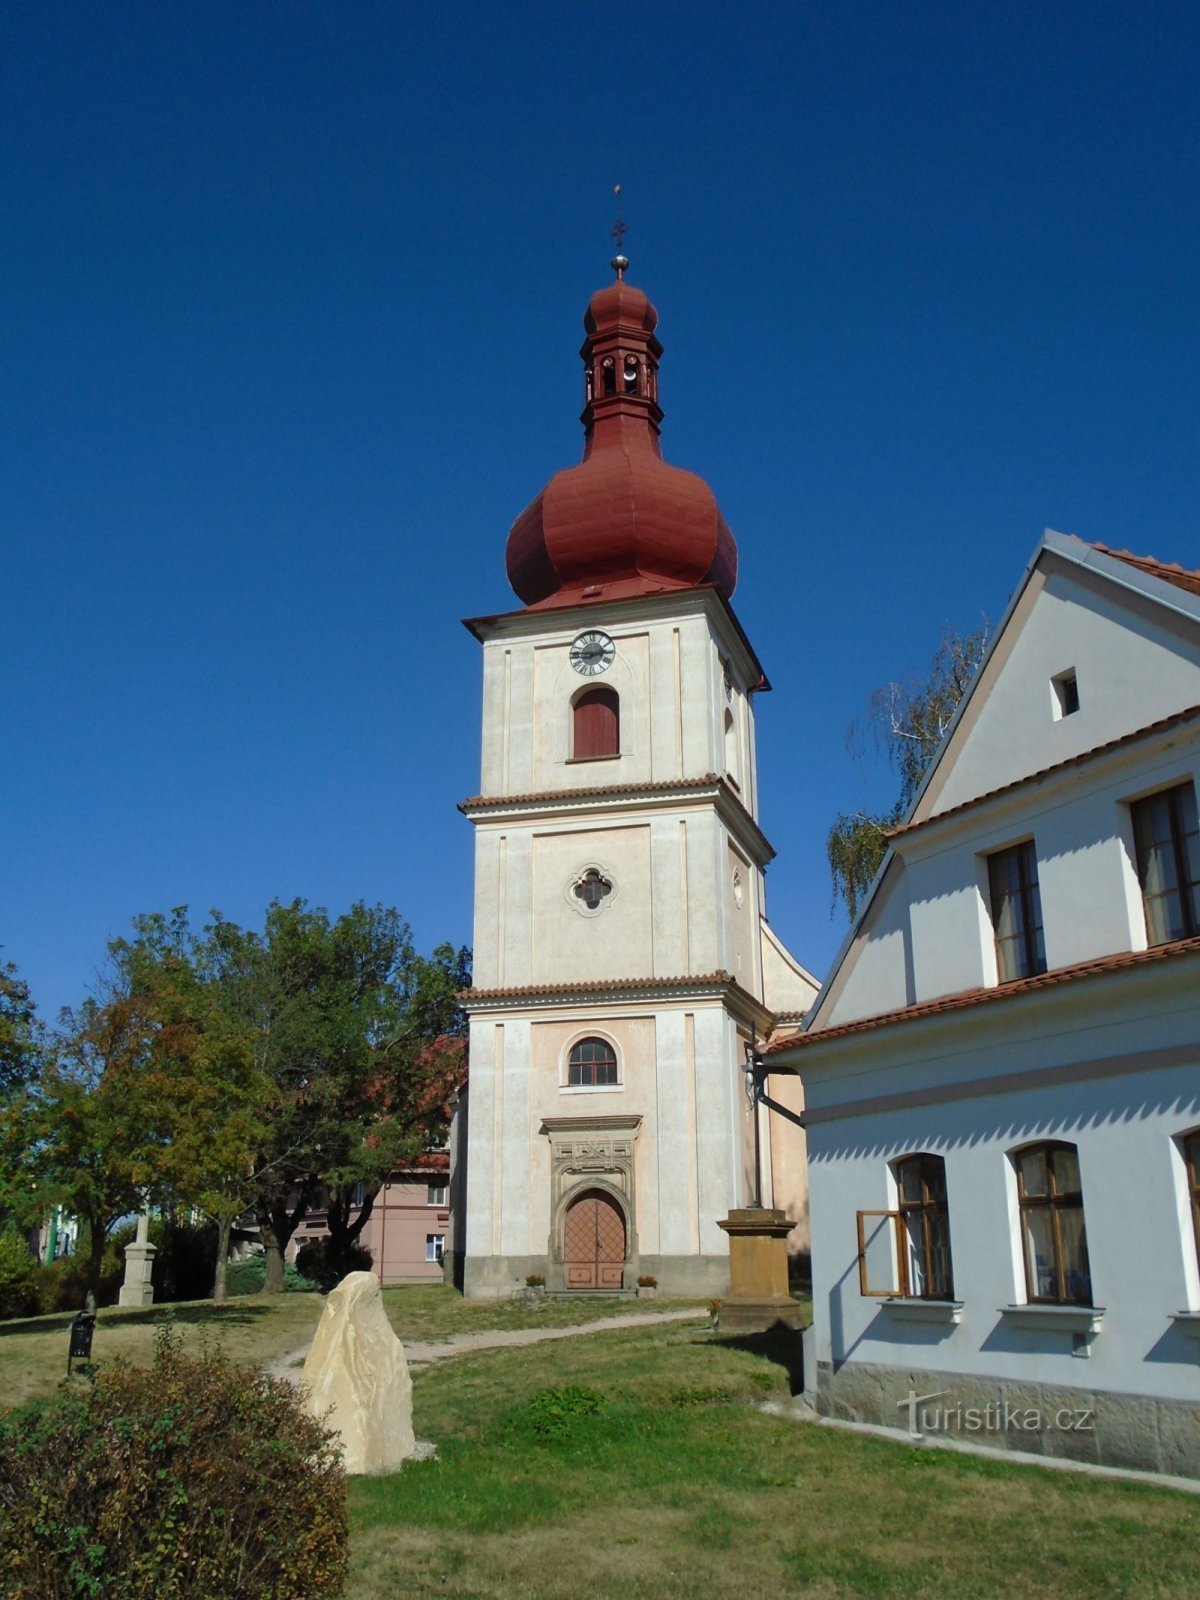 Church of St. Jakub (Jaroměř, 12.9.2018/XNUMX/XNUMX)